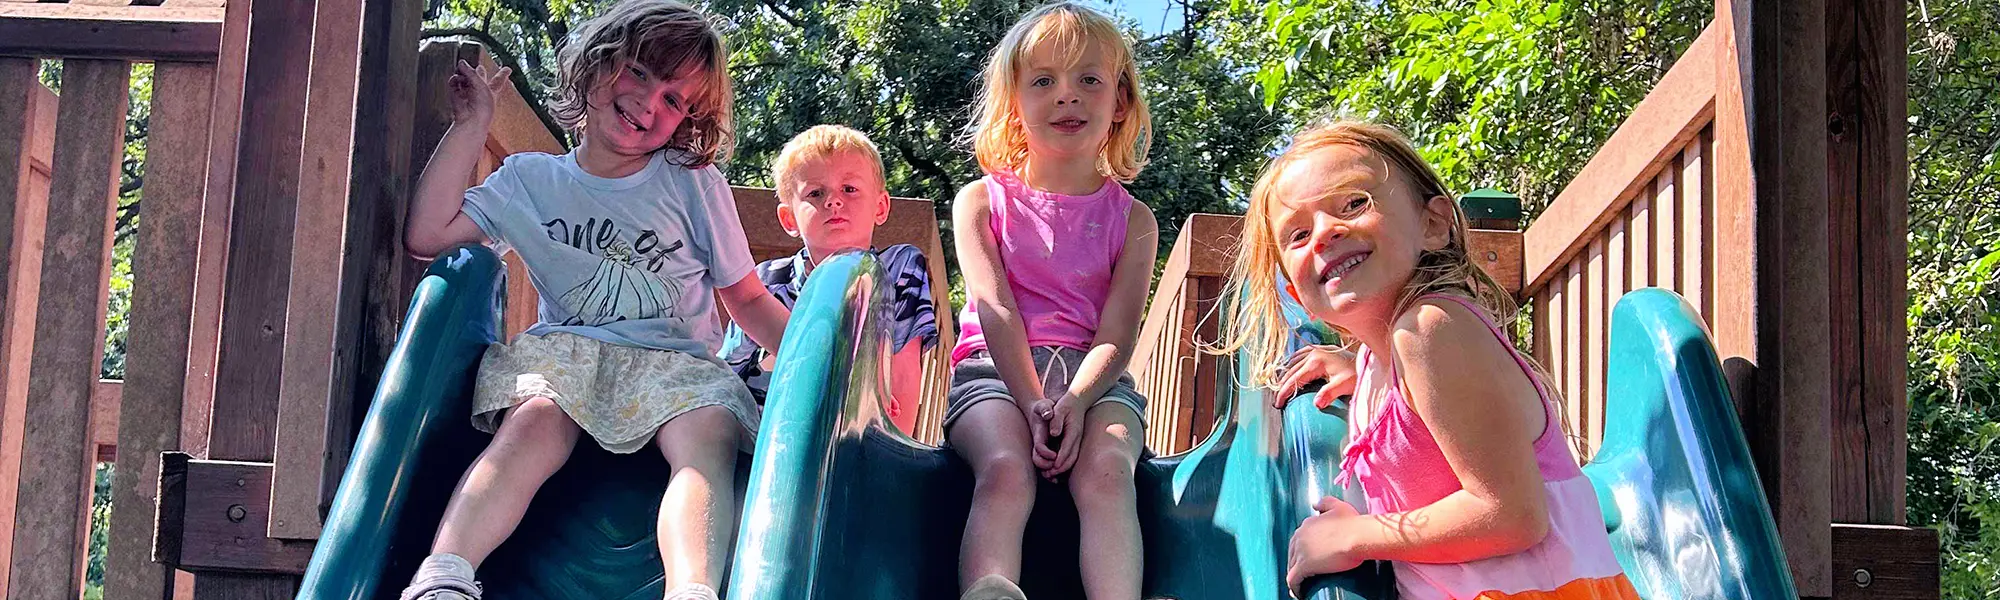 Kids on the slide at the Dream Park